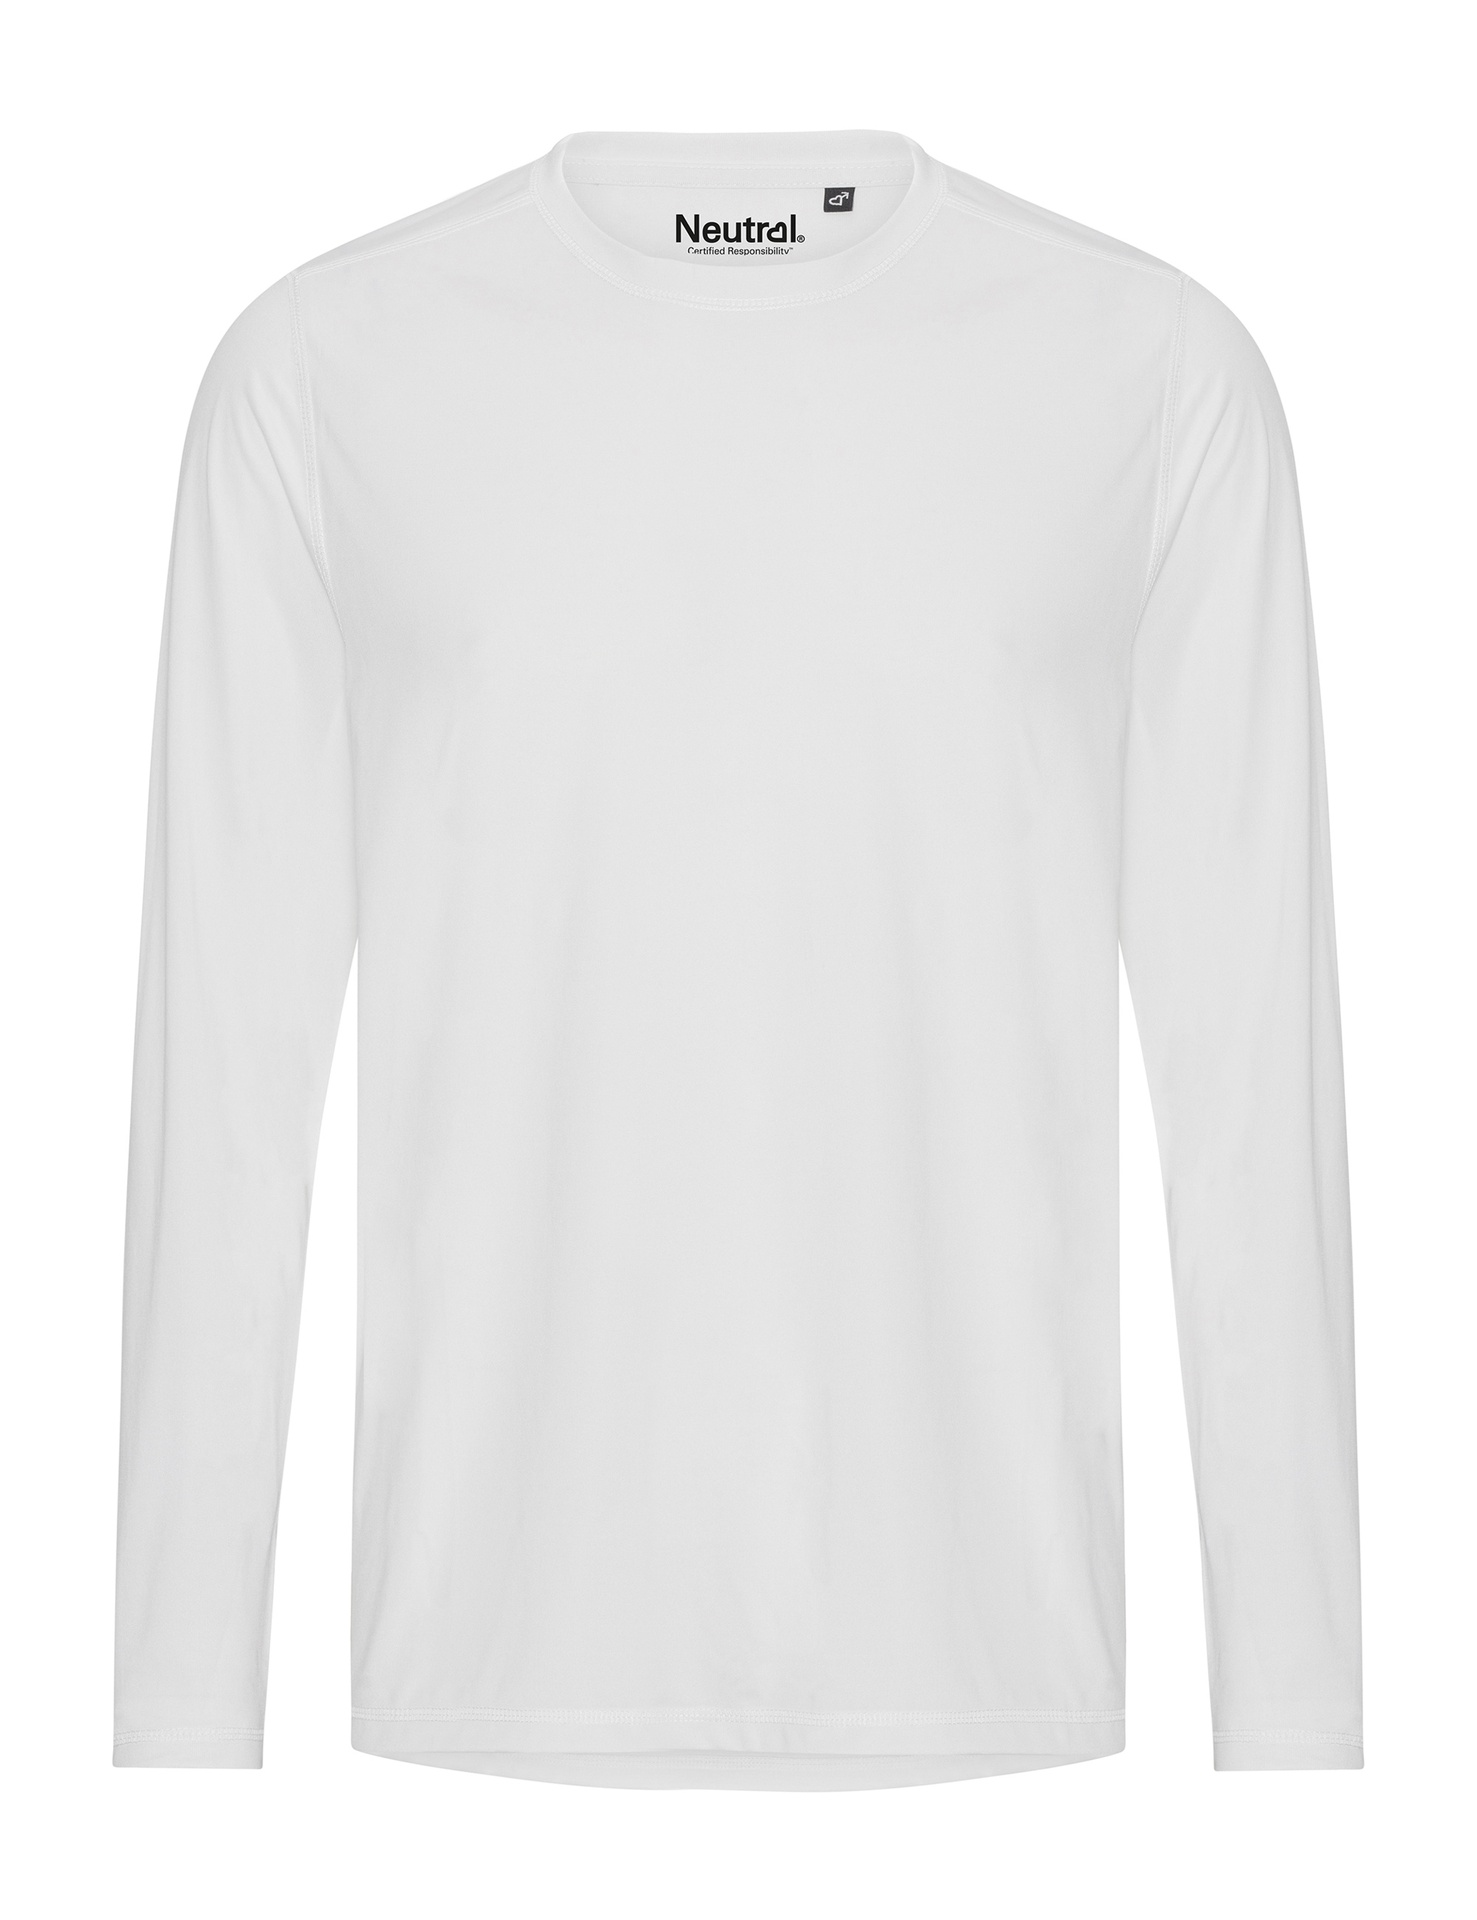 [PR/03823] Recycled Performance LS T-Shirt (White 01, XL)